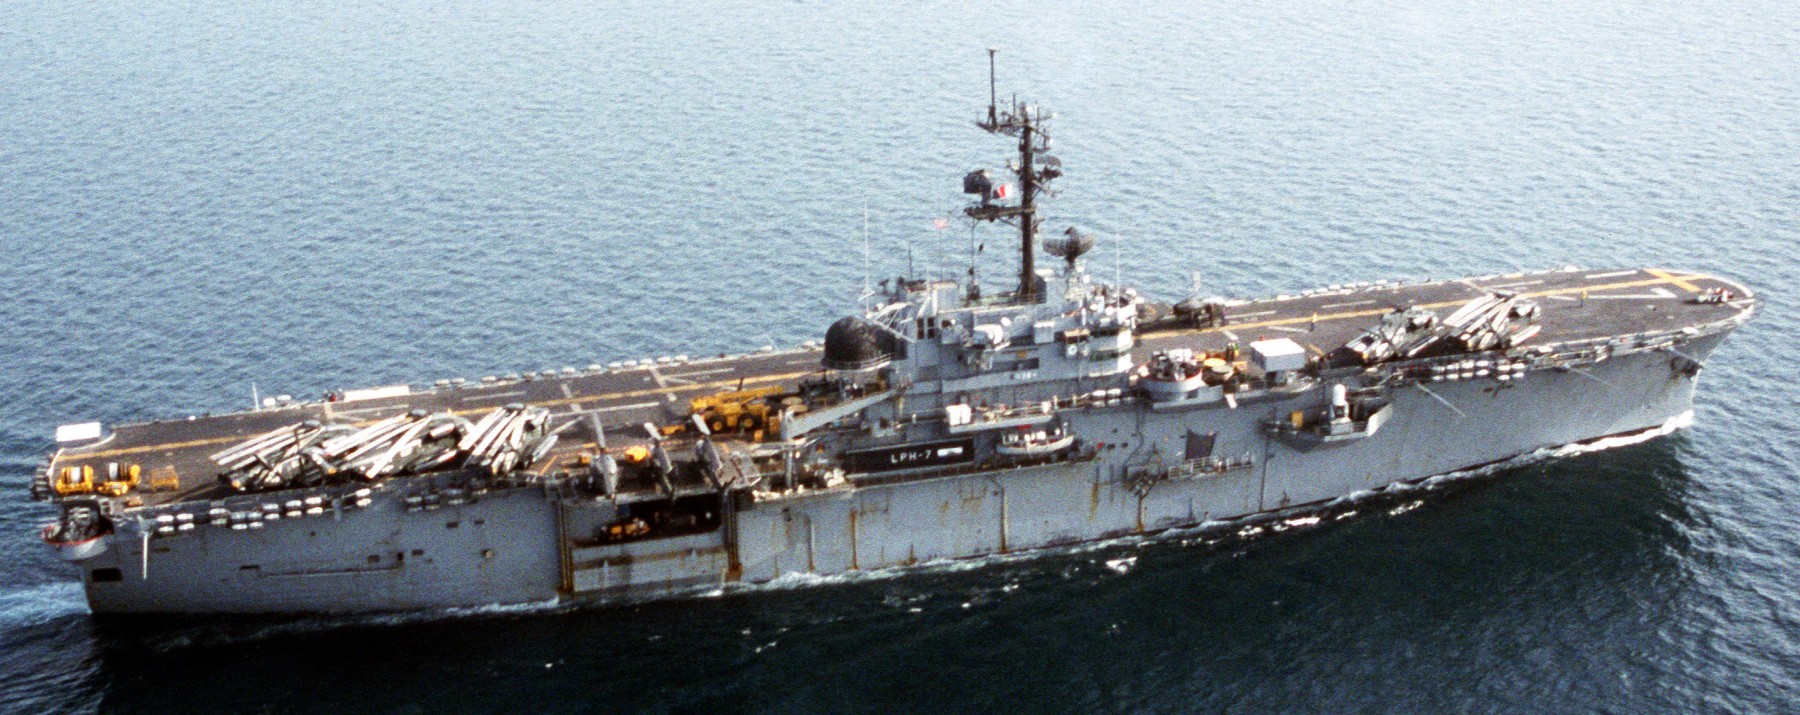 lph-7 uss guadalcanal iwo jima class amphibious assault ship landing platform helicopter us navy 43 persian gulf